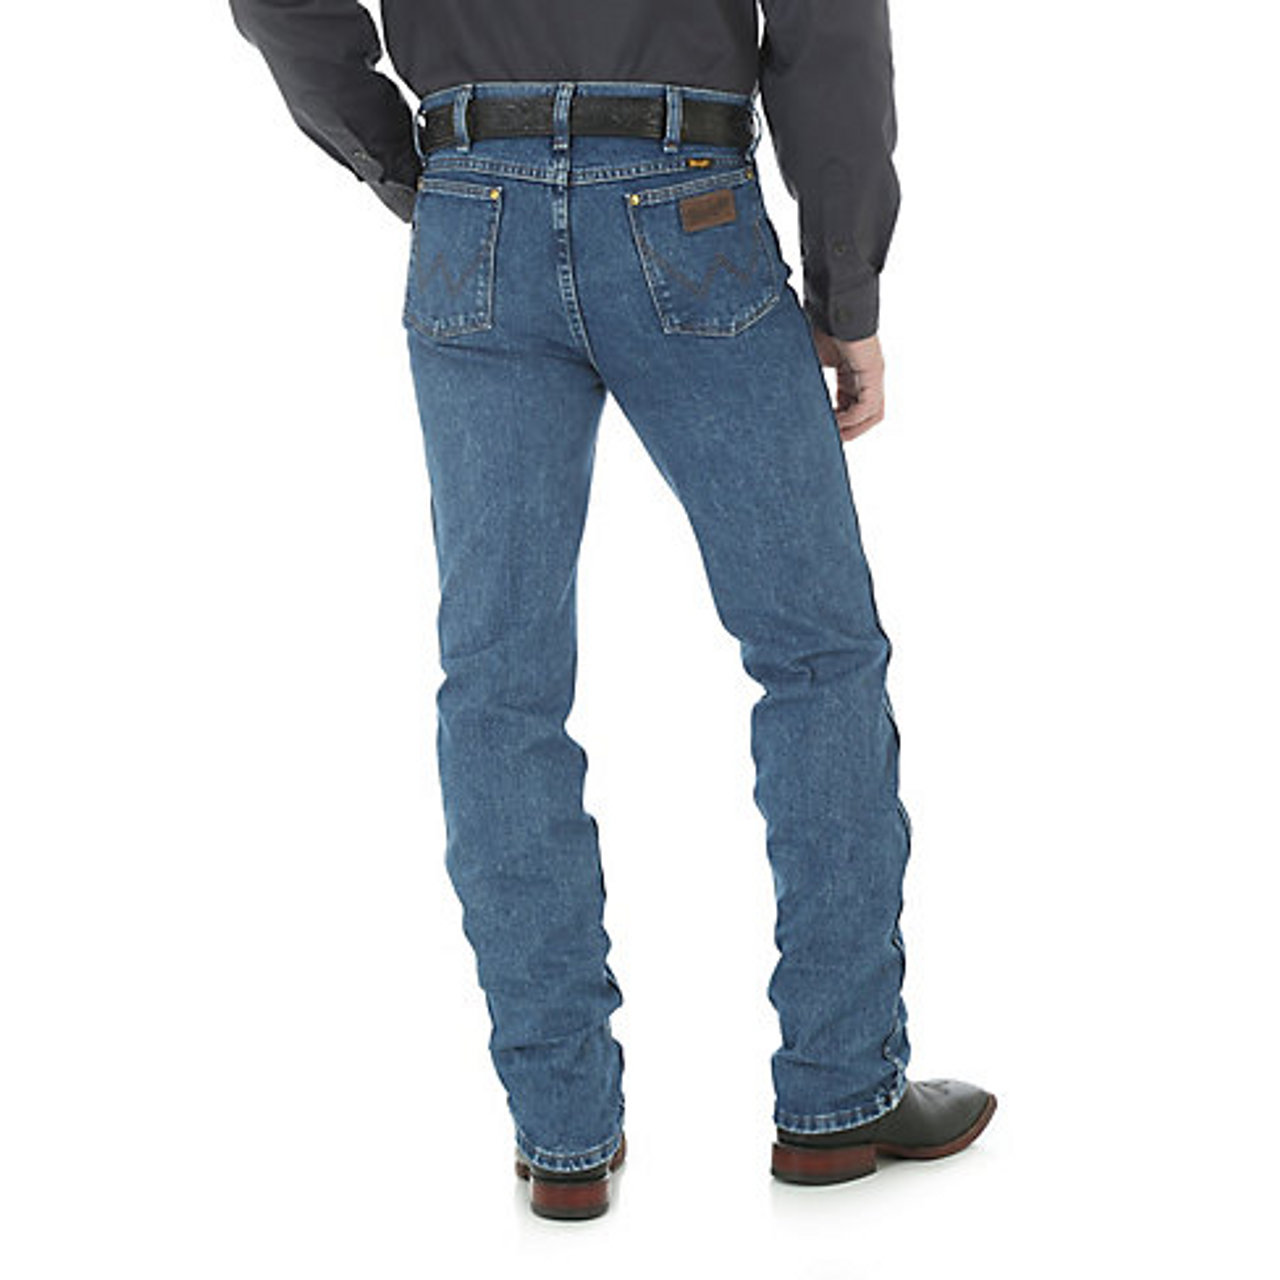 Wrangler Mens Jeans - Premium Performance Cowboy Cut - Dark Stone Wash -  Billy's Western Wear